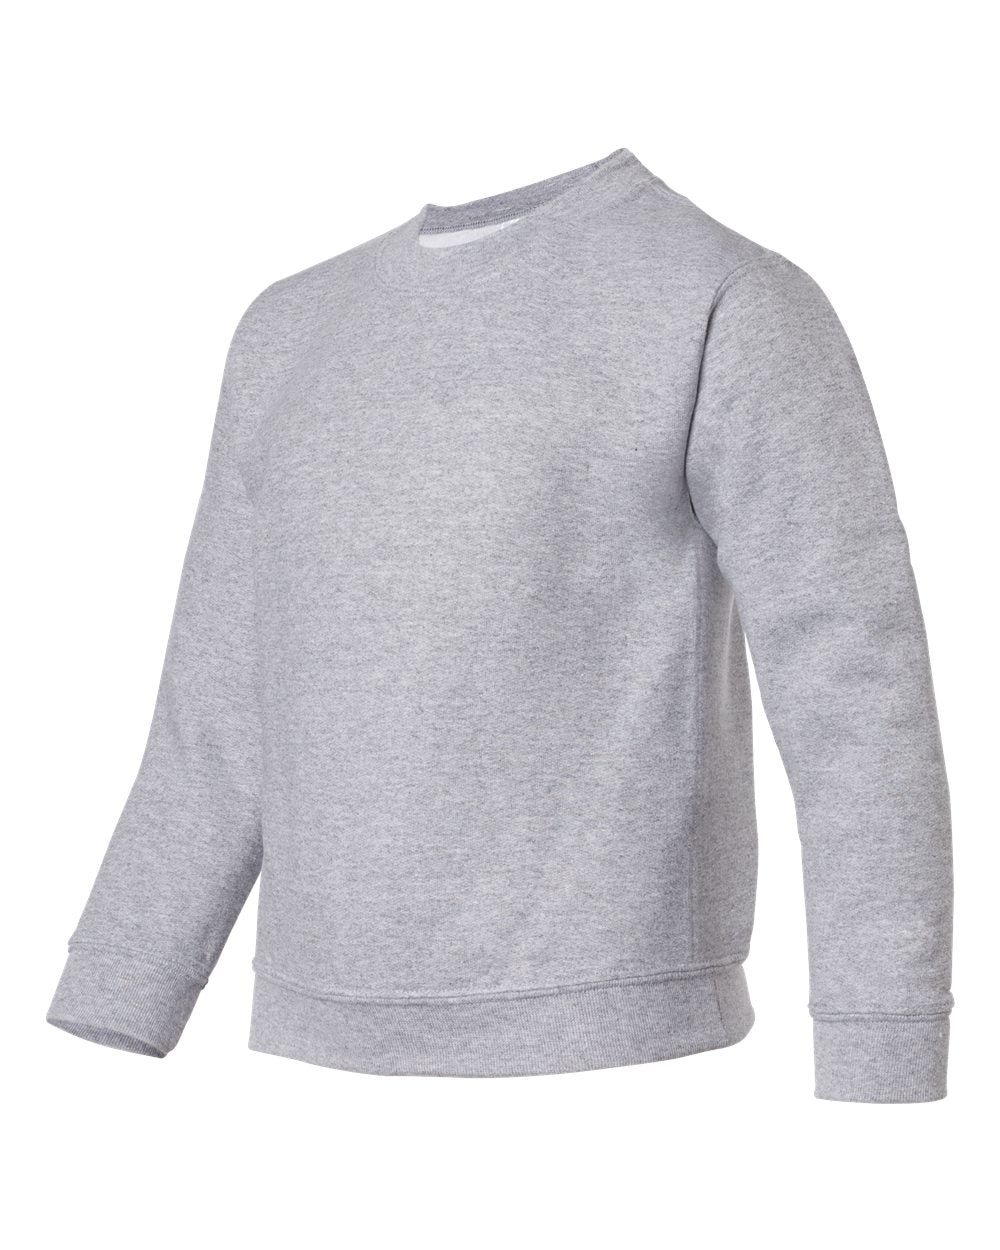 Gildan Heavy Blend™ Youth Sweatshirt 18000B #color_Sport Grey